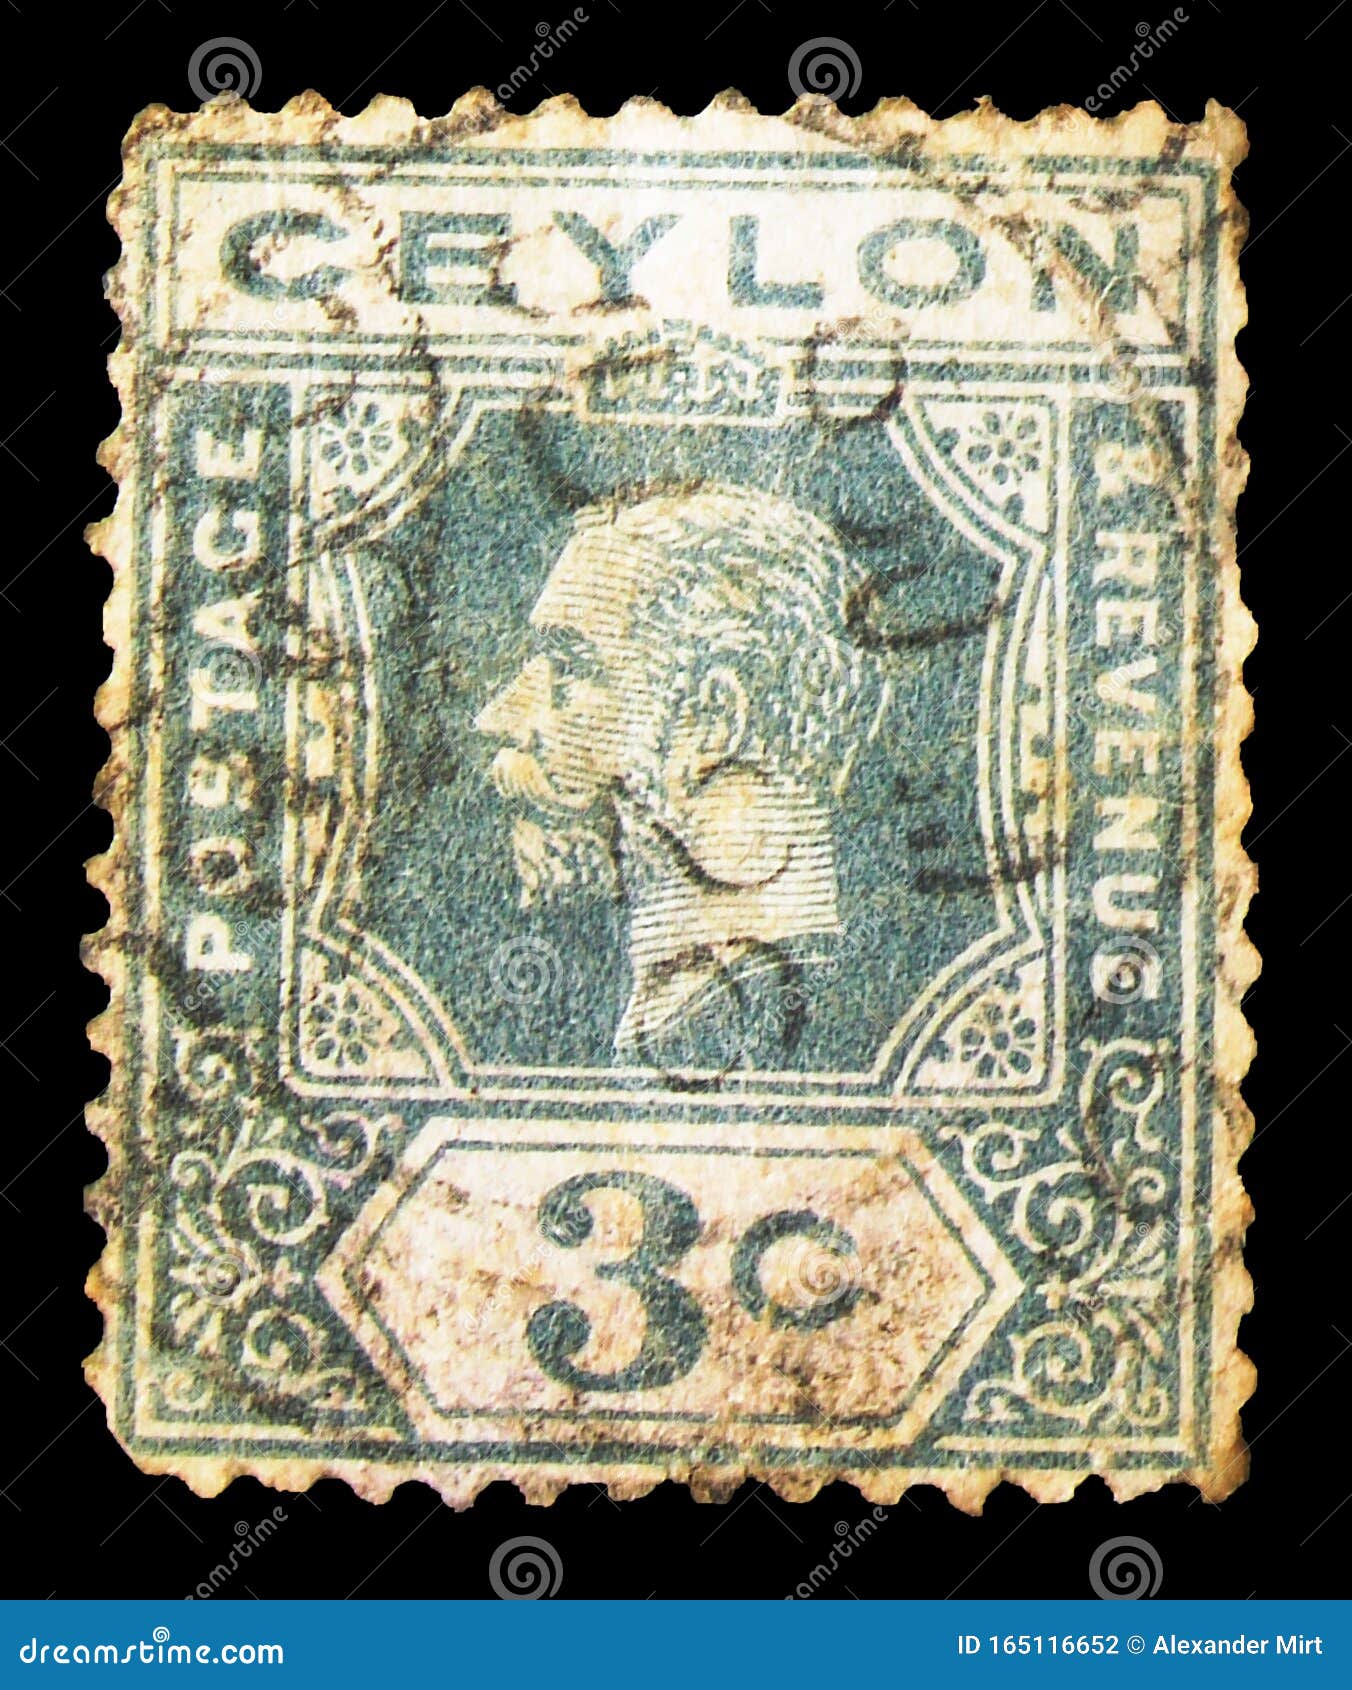 Cancelled Postage Stamp Set #450-270 Mission Stamp Co. Vintage Ceylon-Sri Lanka 3pc